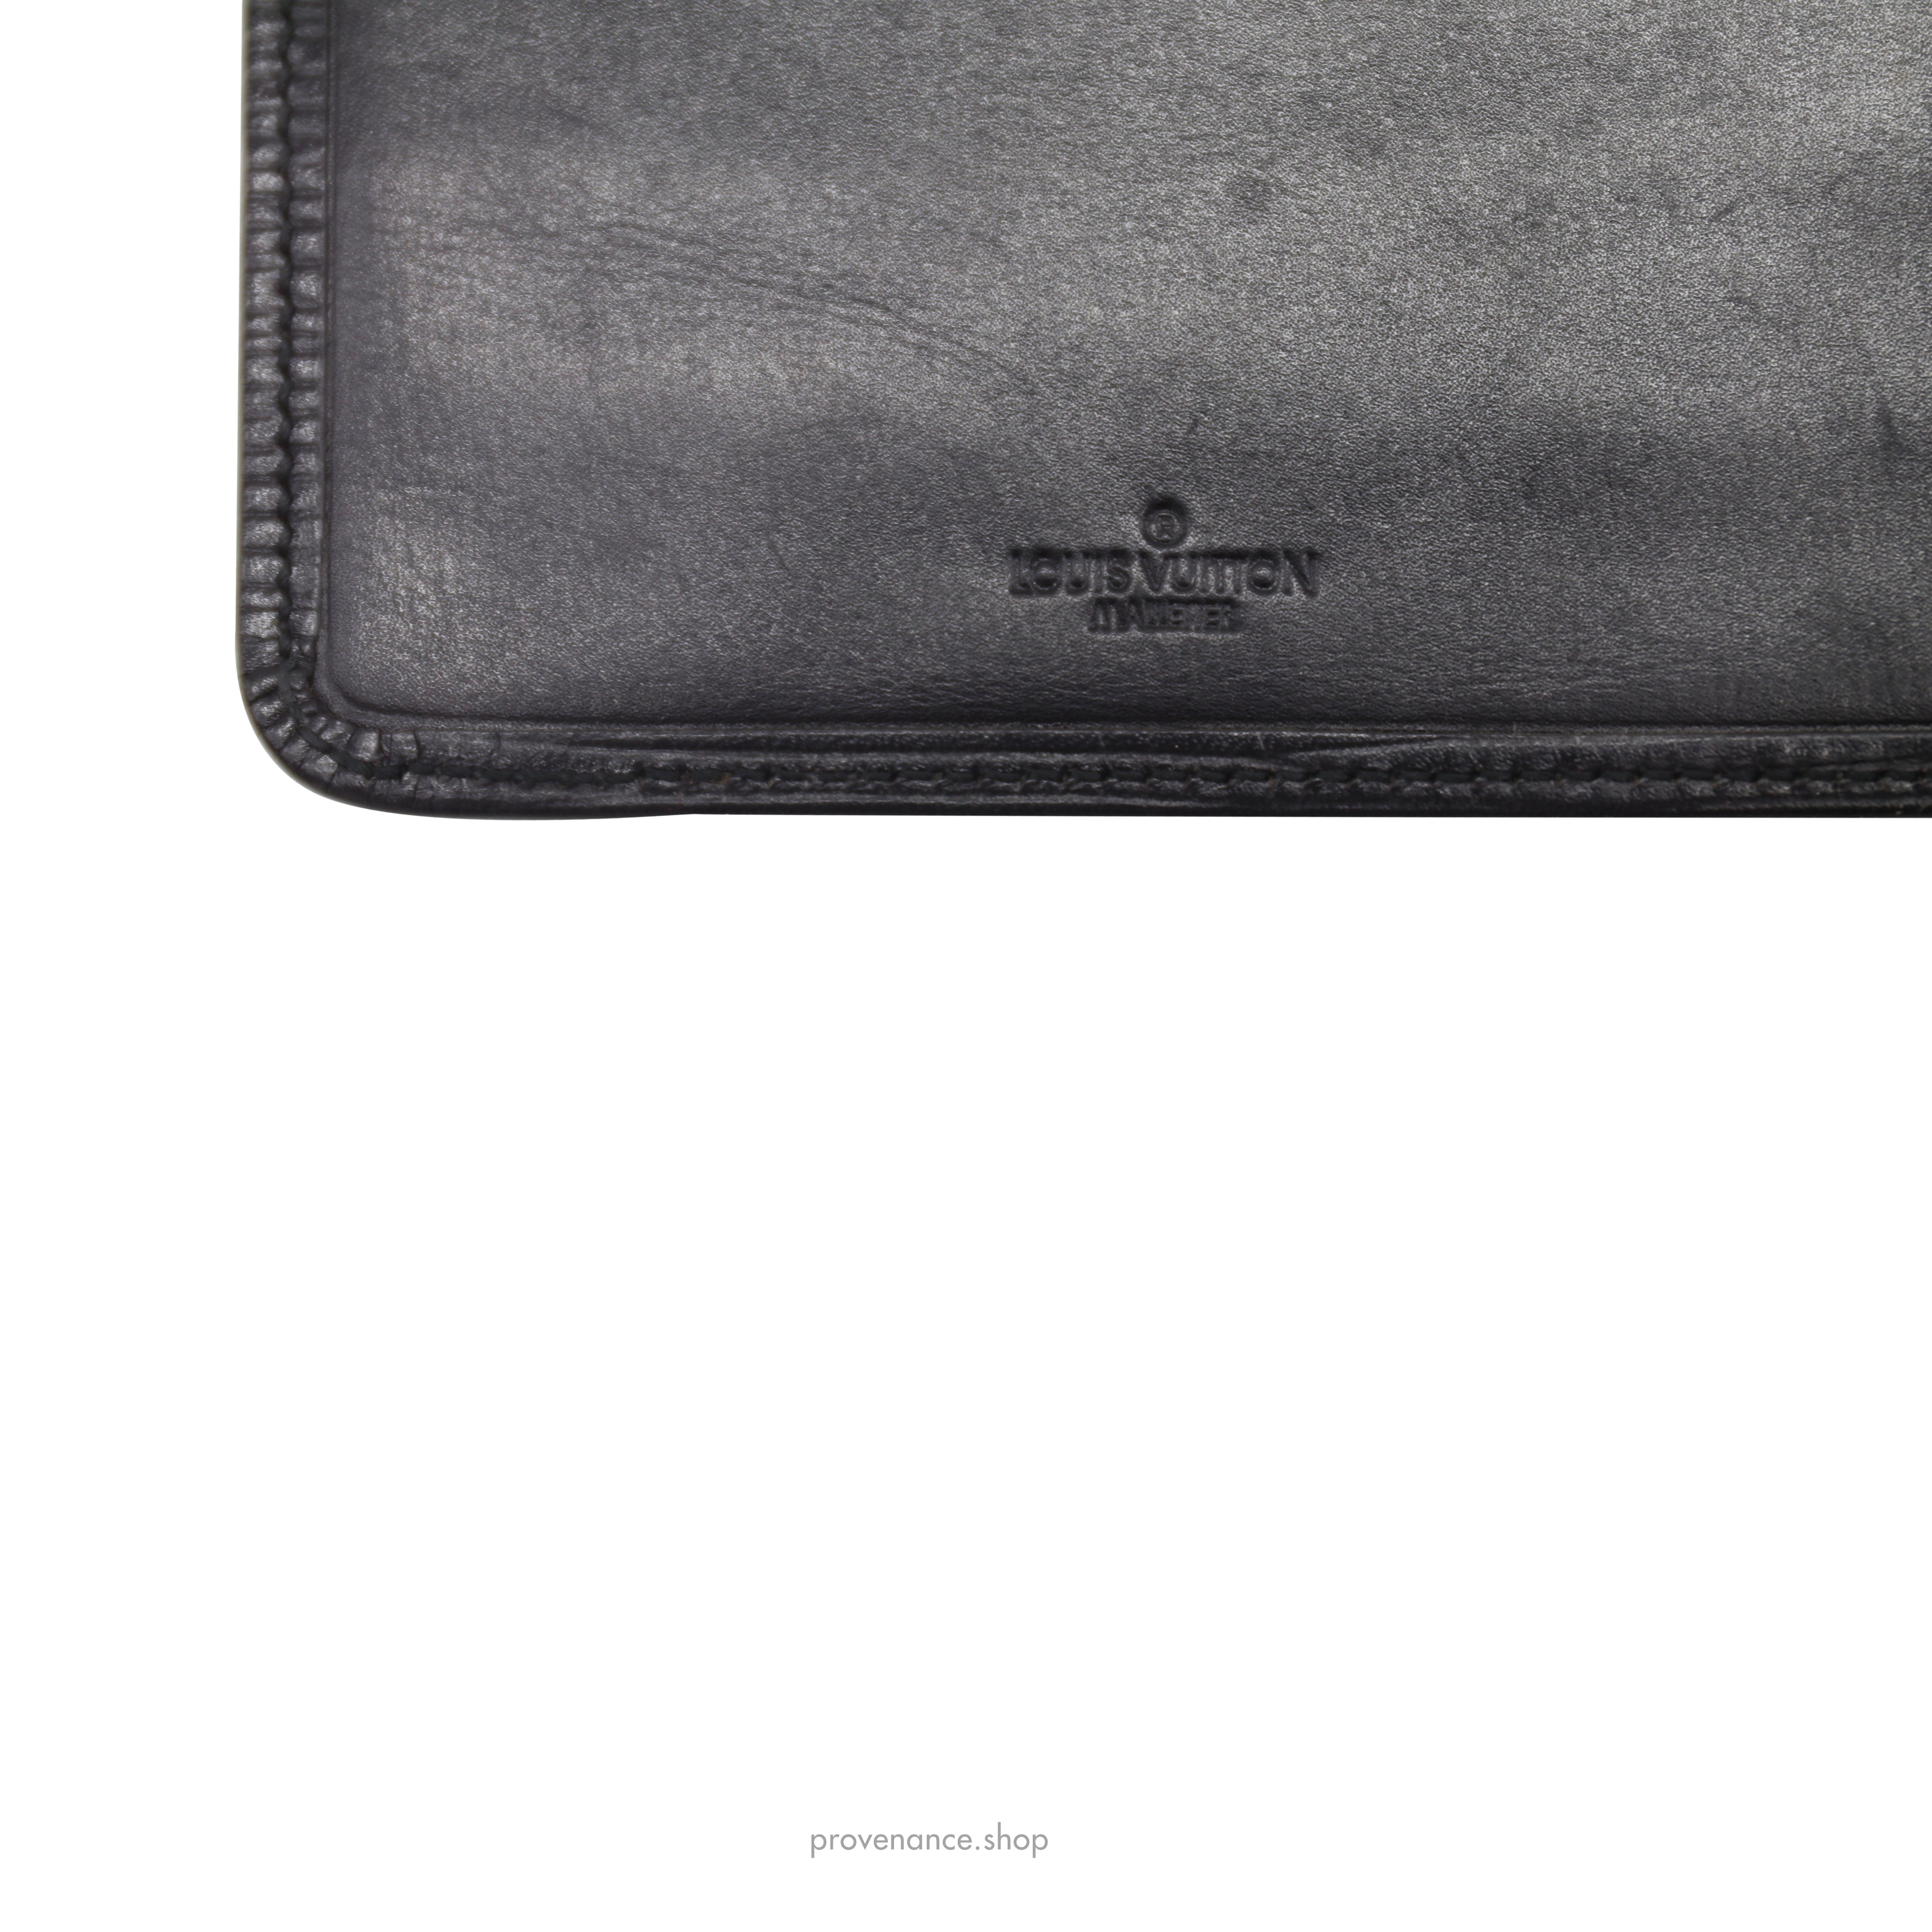 Louis Vuitton Malletier Long Wallet